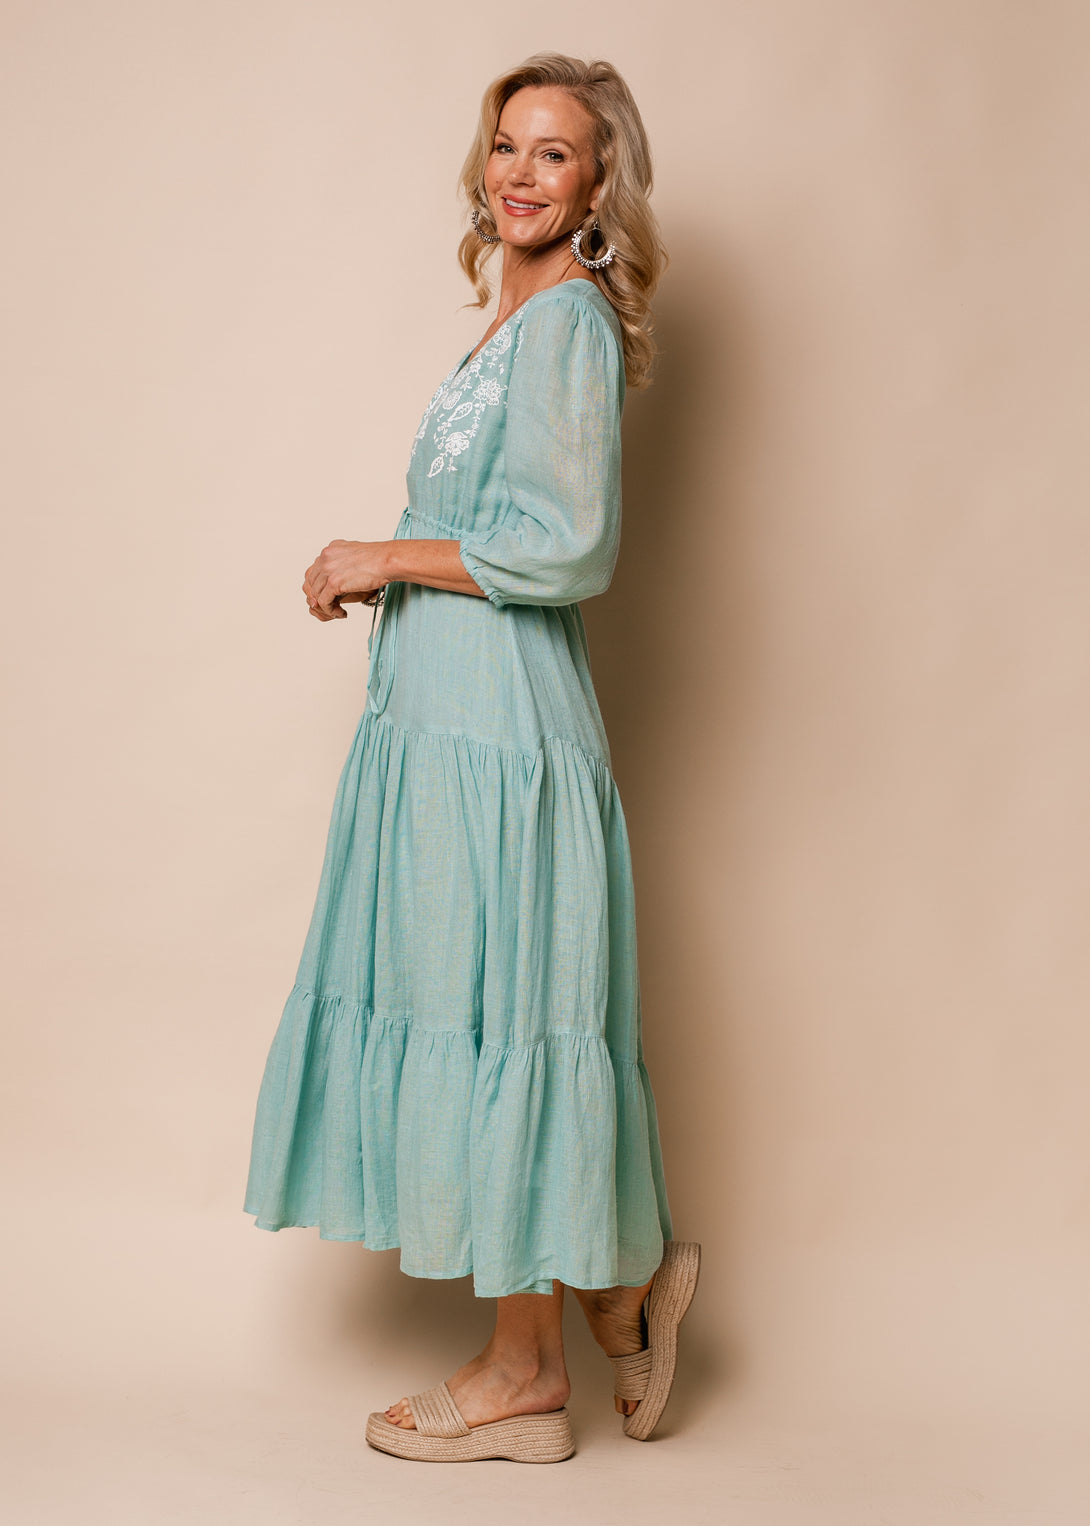 Danica Linen Dress in Aqua Mist - Imagine Fashion